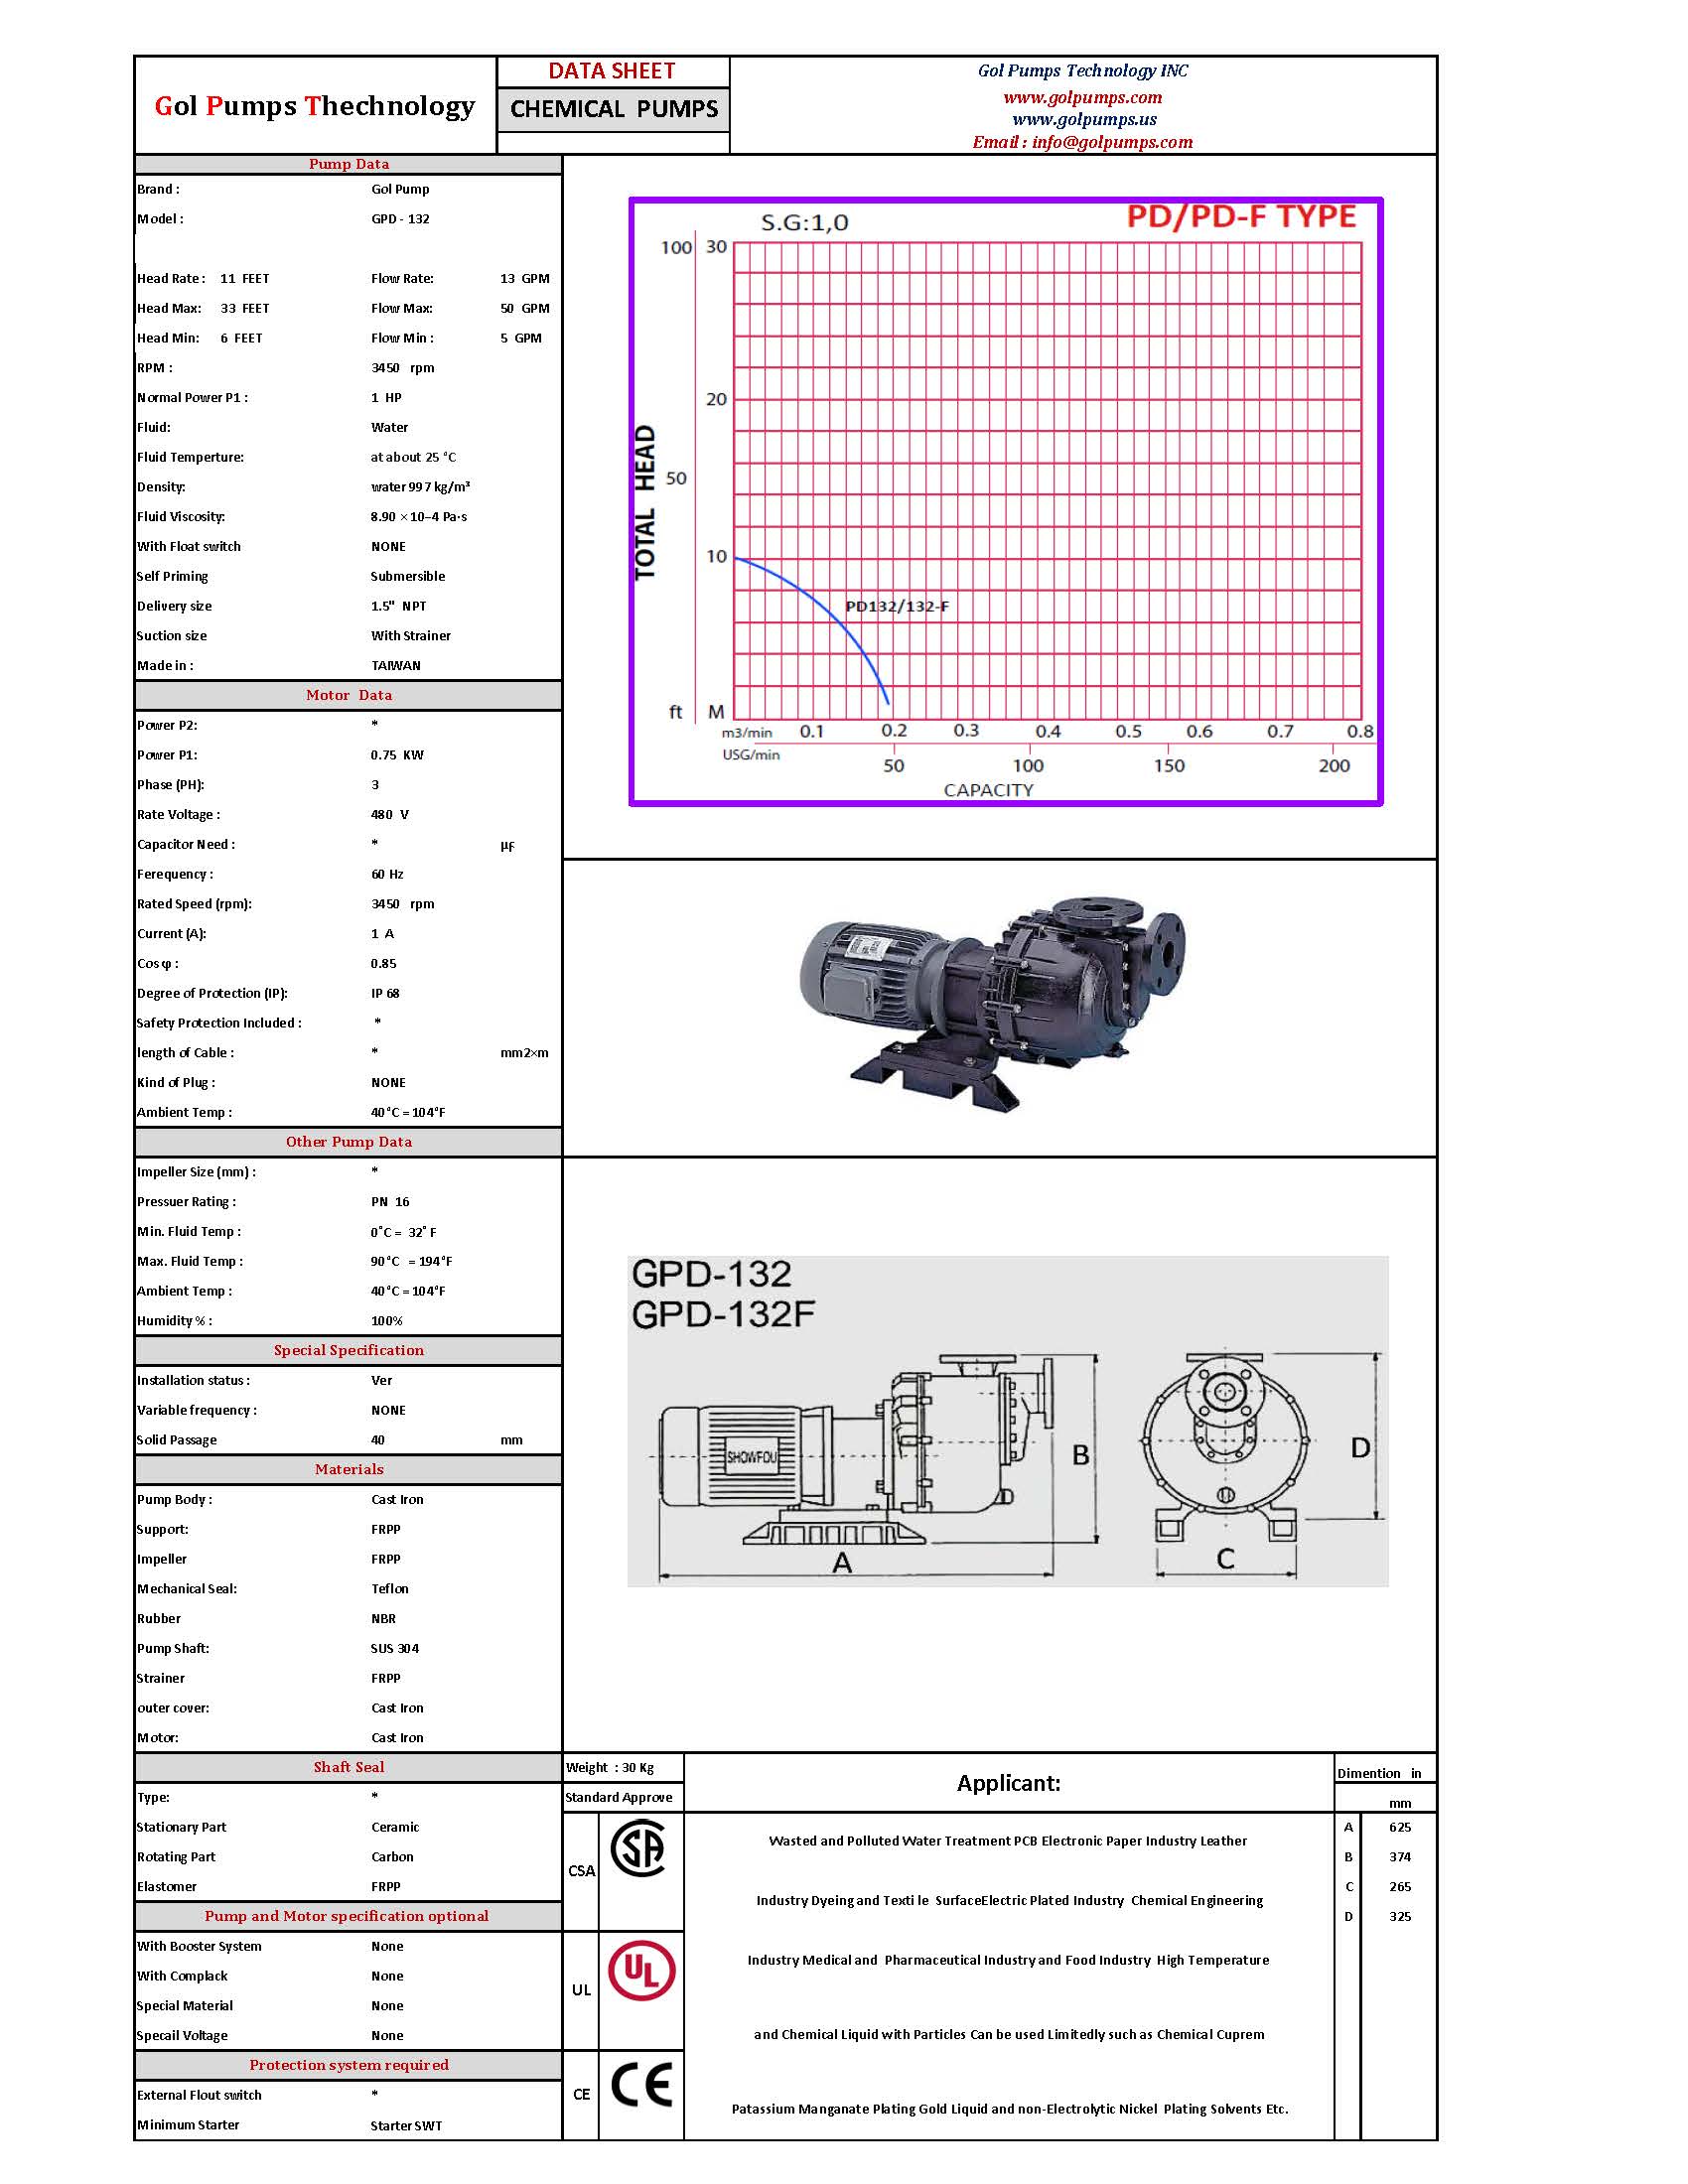 GPD-132 Chemical Pump - Data Sheet